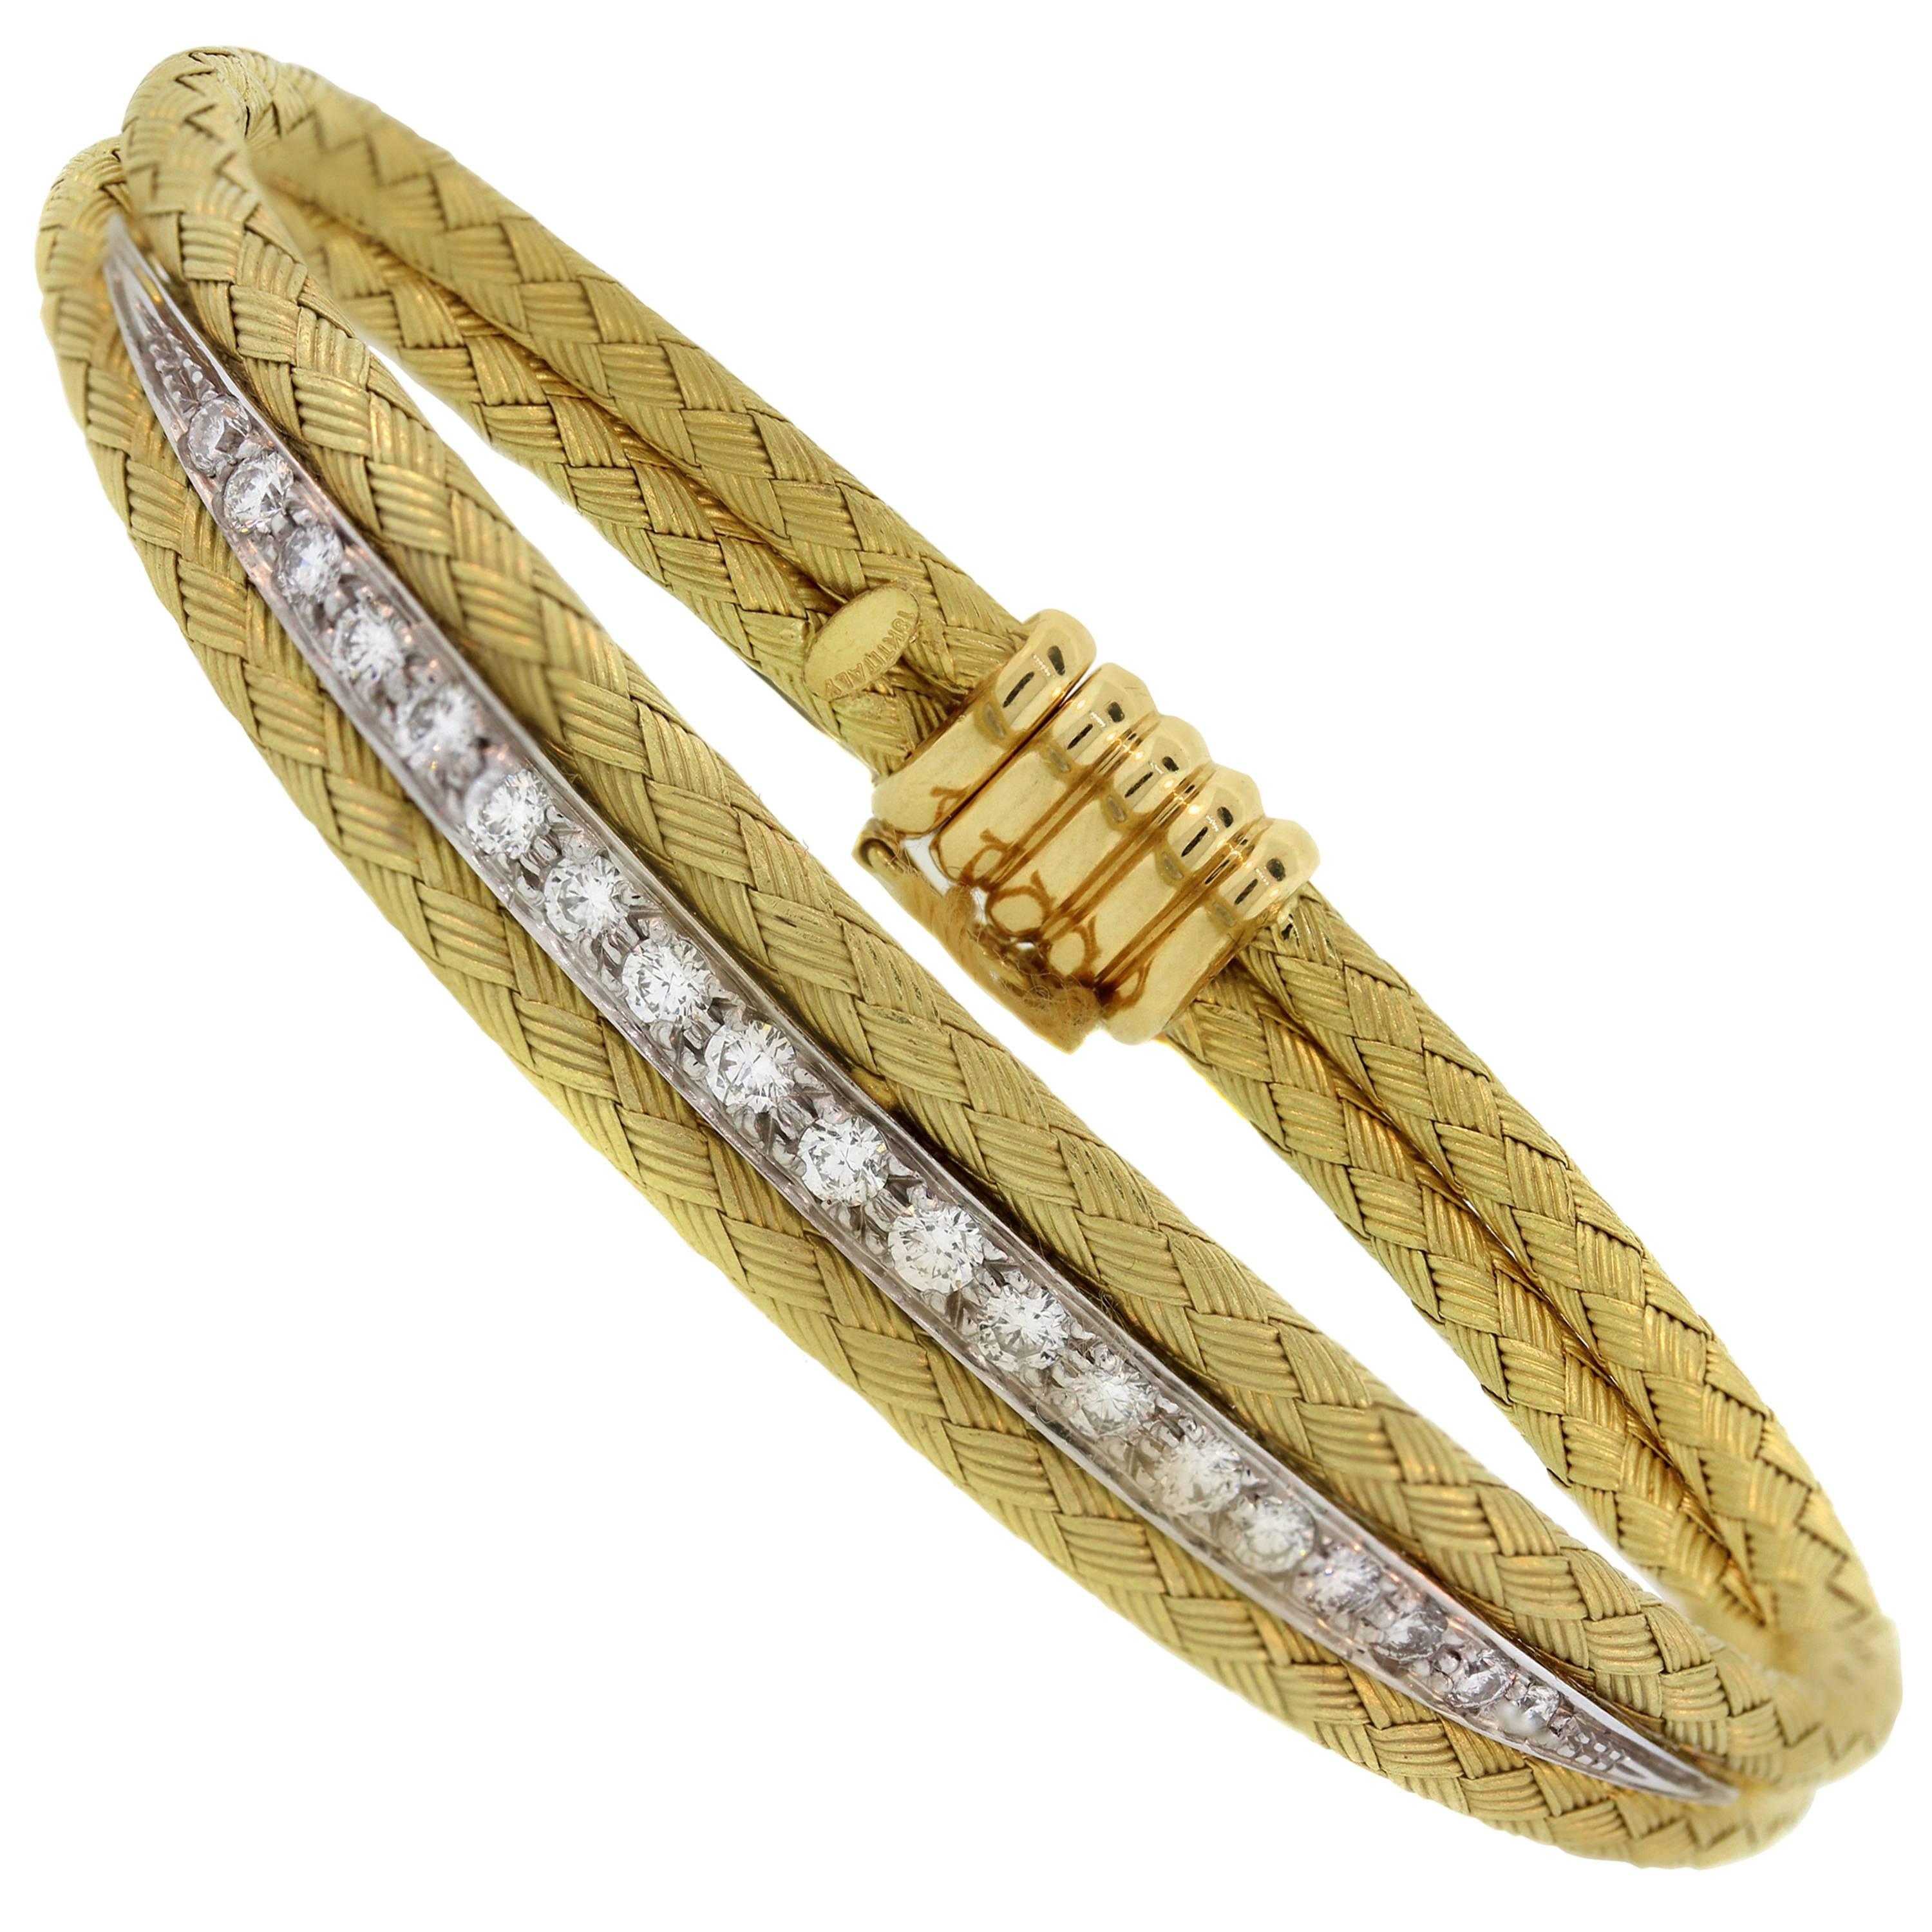 Textured Yellow Gold and Diamond Bracelet